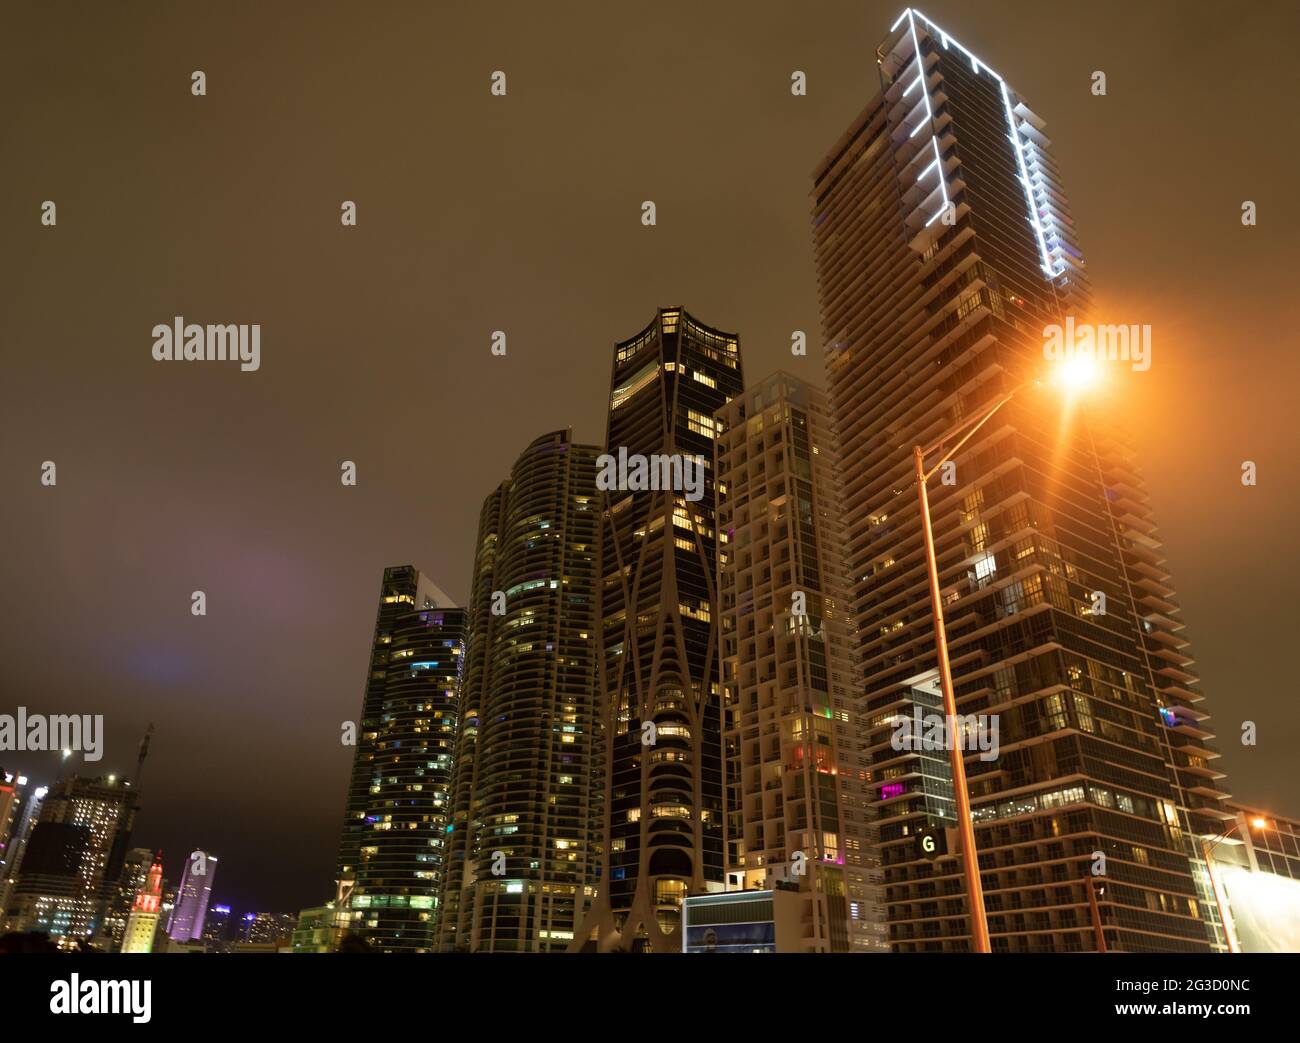 Towerblocks lit up in night city of Miami, USA Stock Photo